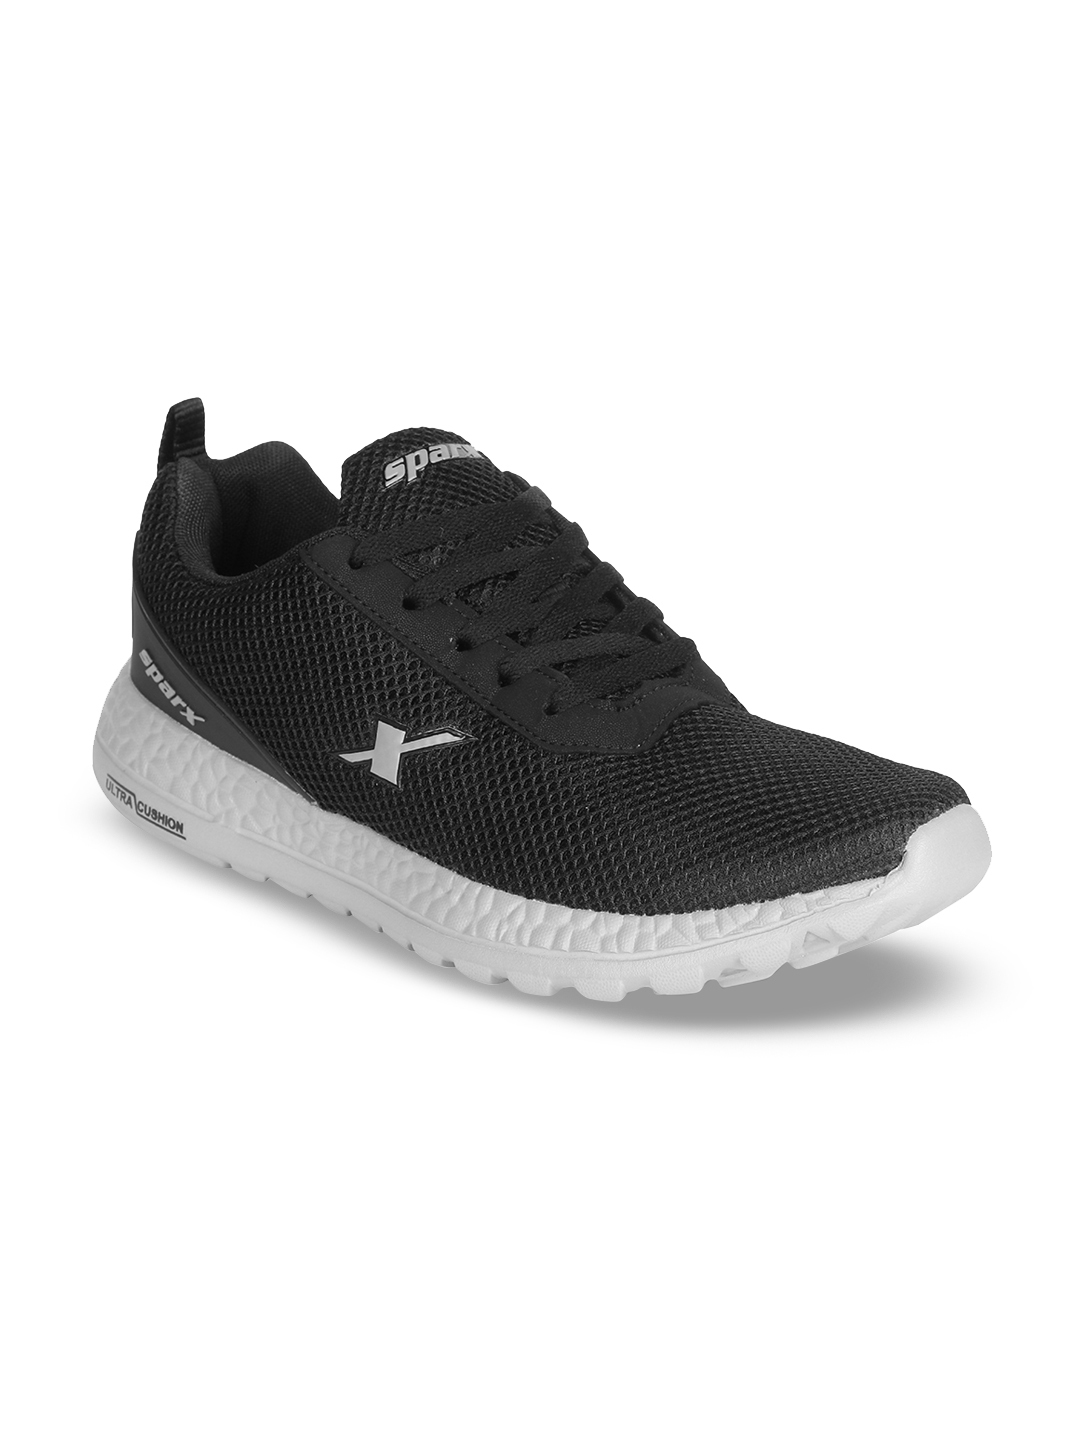 Buy Sparx Men Black Running Shoes 